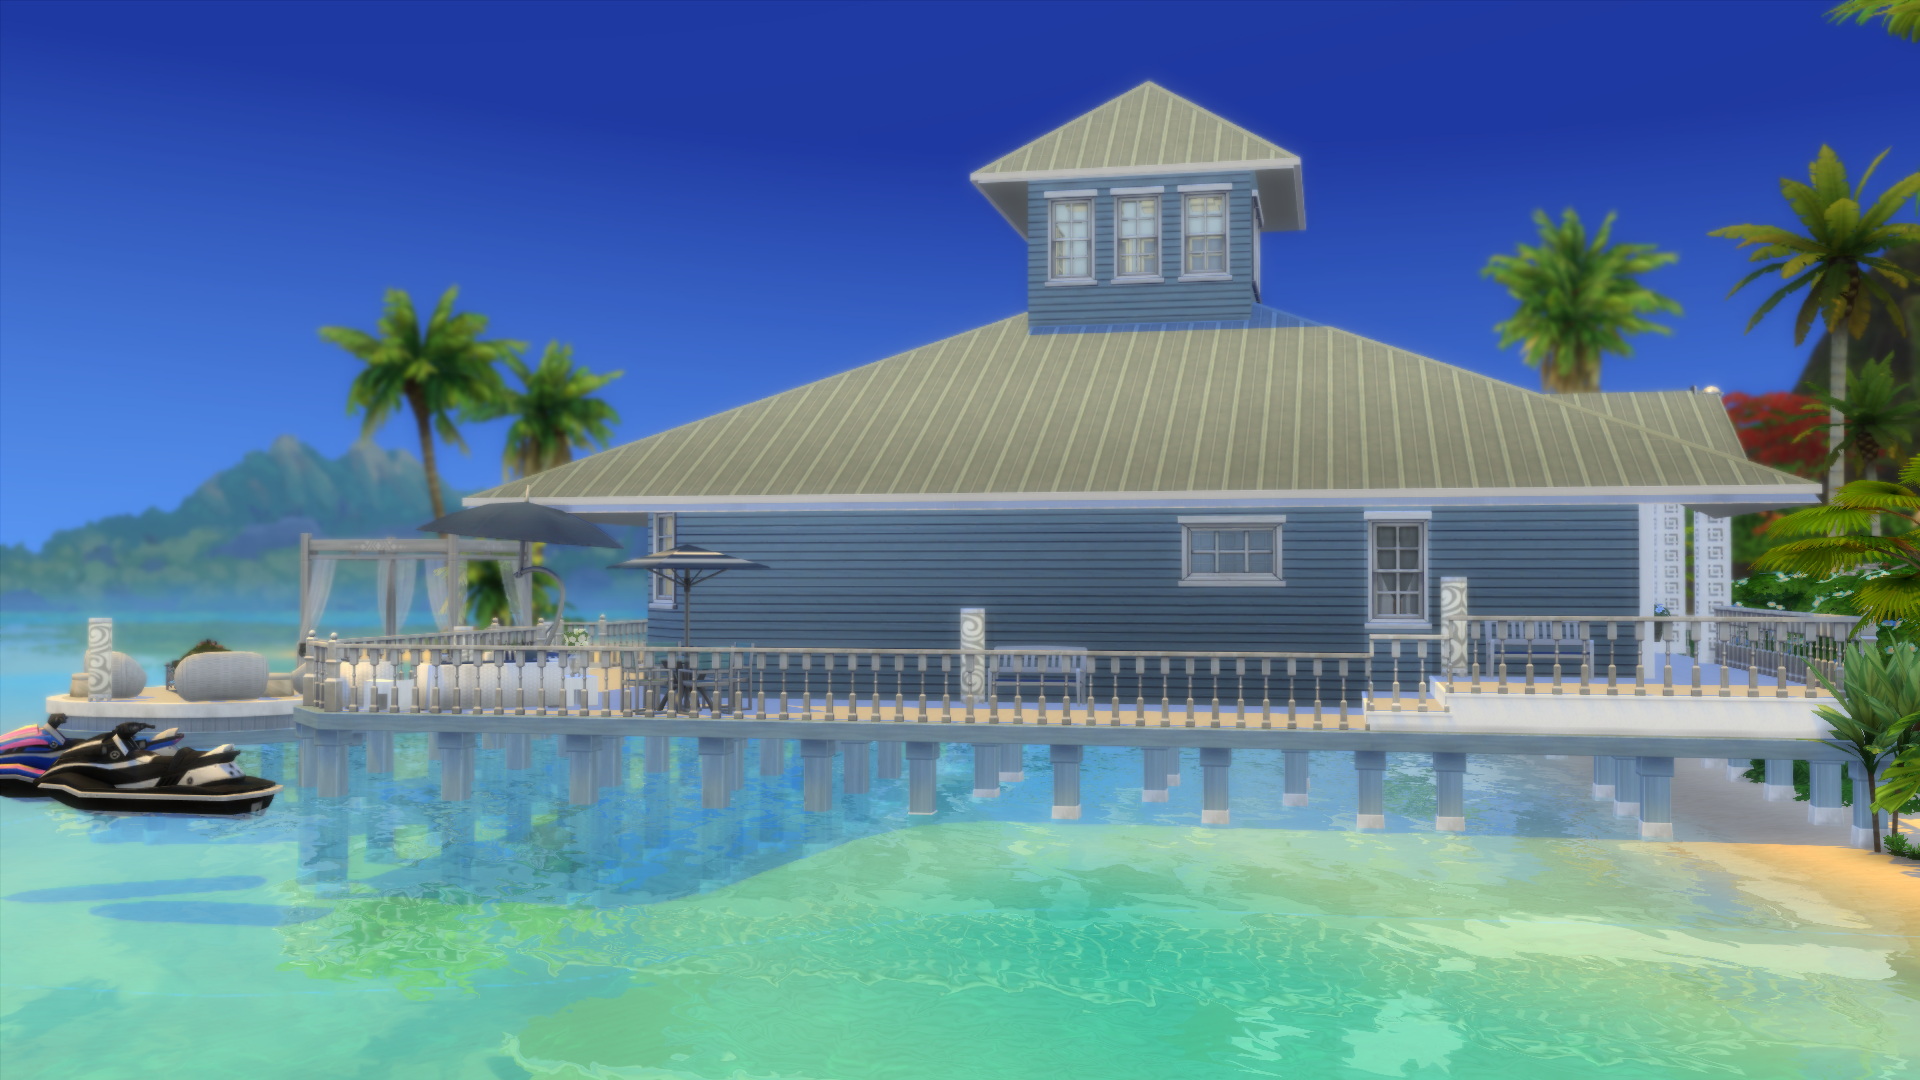 Sims 4 Island Home Mod